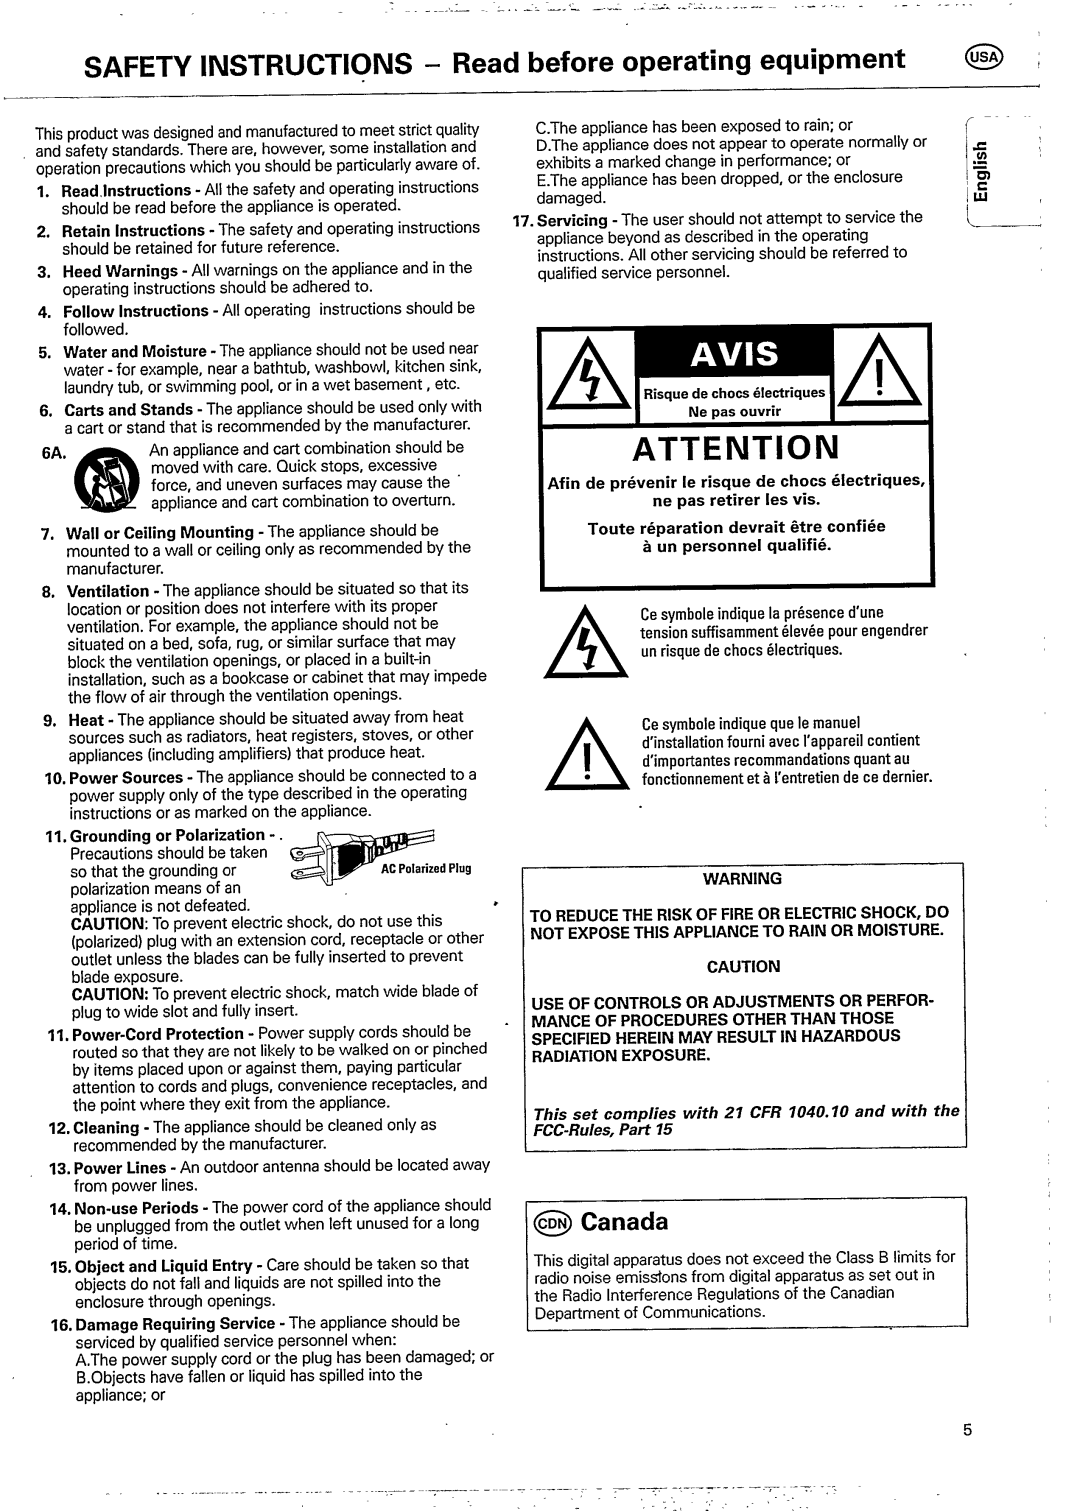 Philips CDC 936 manual 